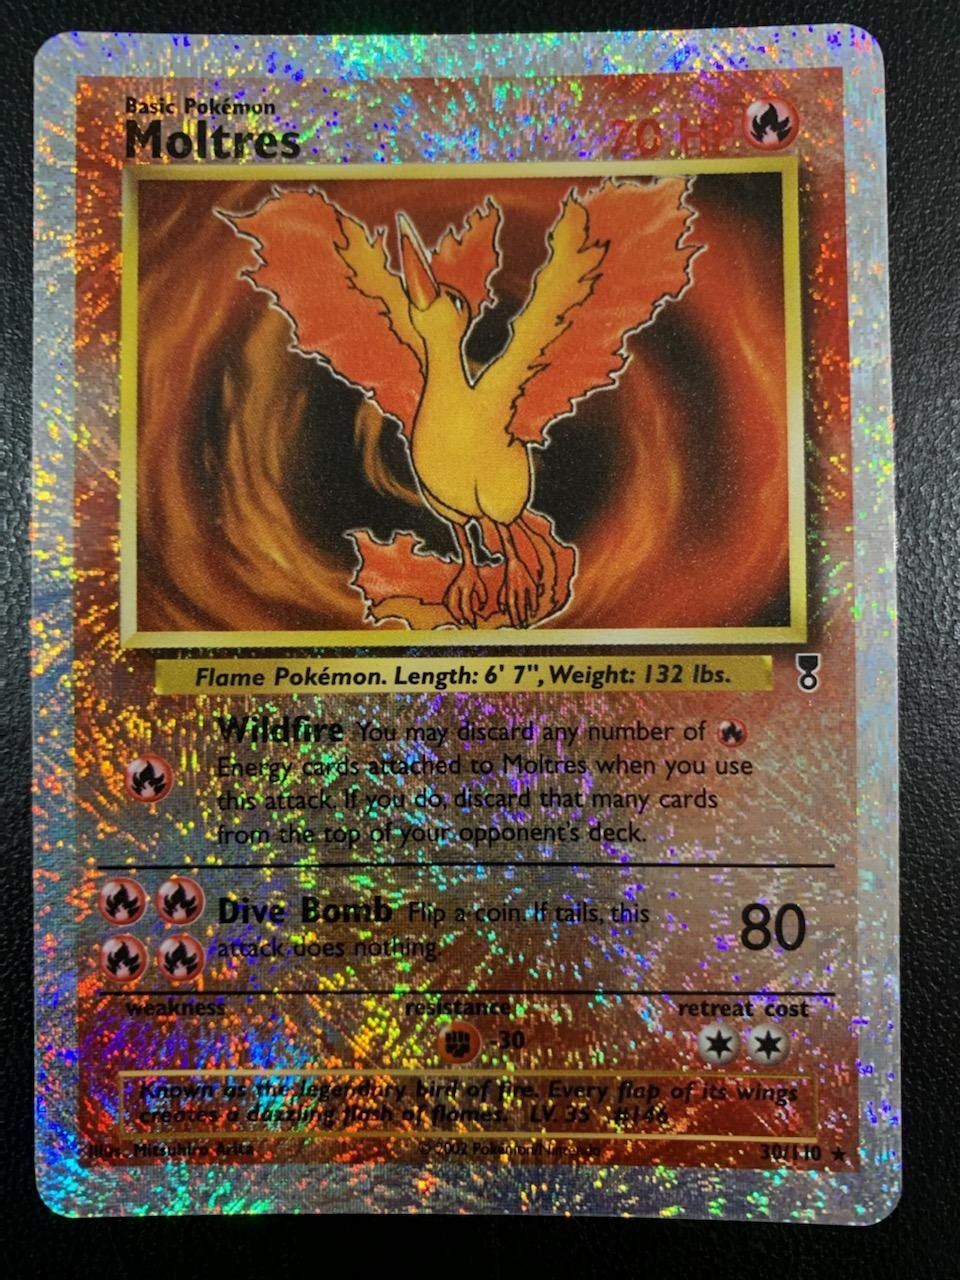 Moltres Reverse-Holo 2002 Pokemon Card. Near mint condition.